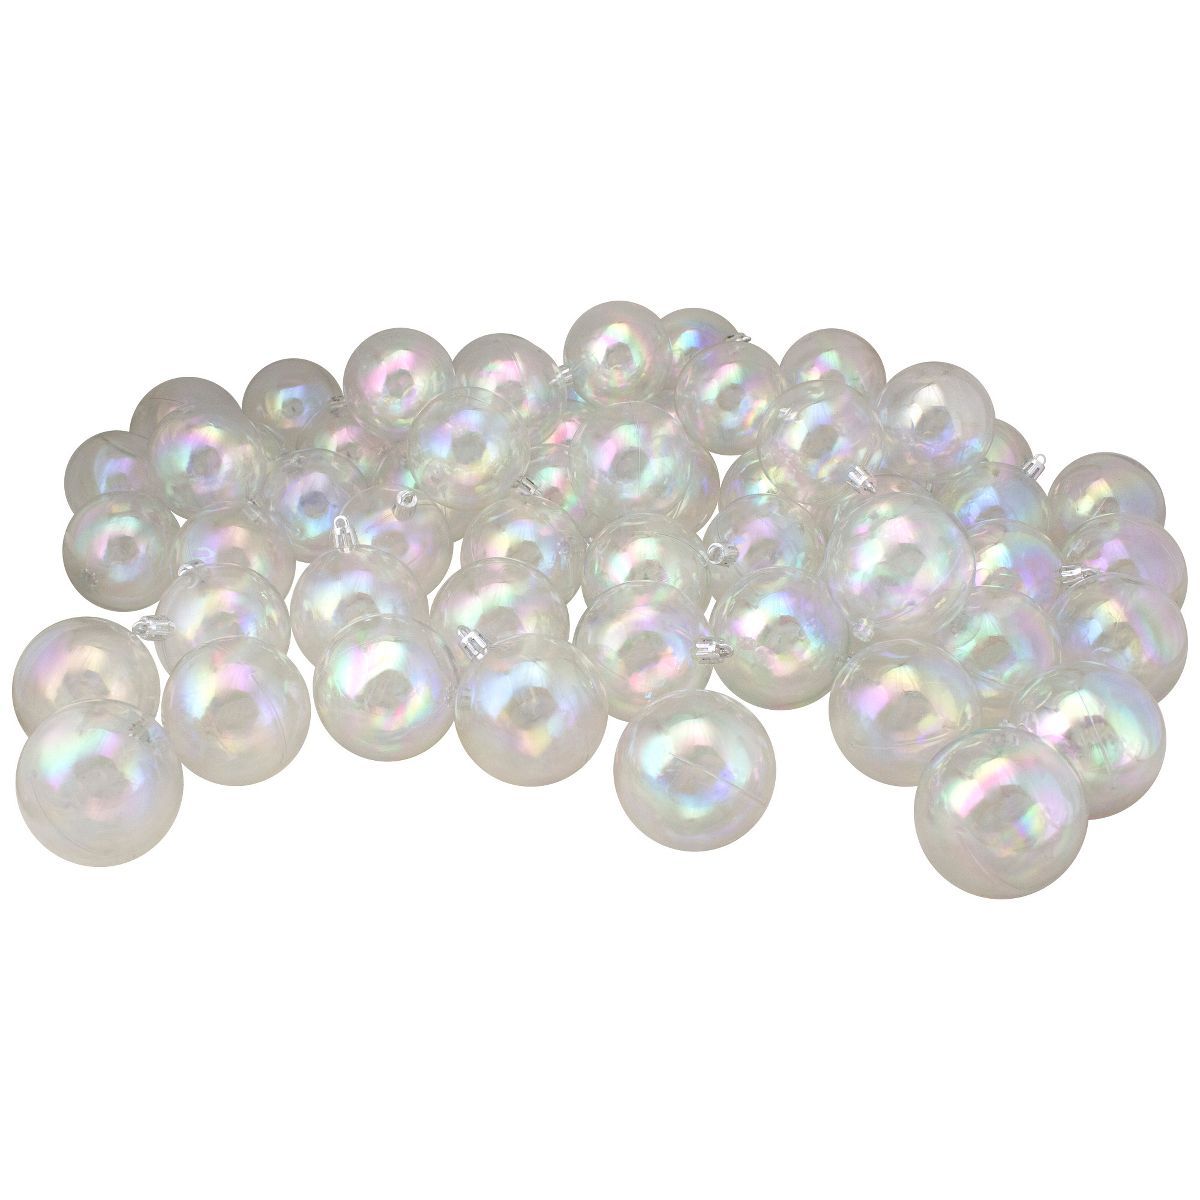 Northlight 60ct Shatterproof Iridescent Shiny Christmas Ball Ornament Set 2.5" - Clear | Target